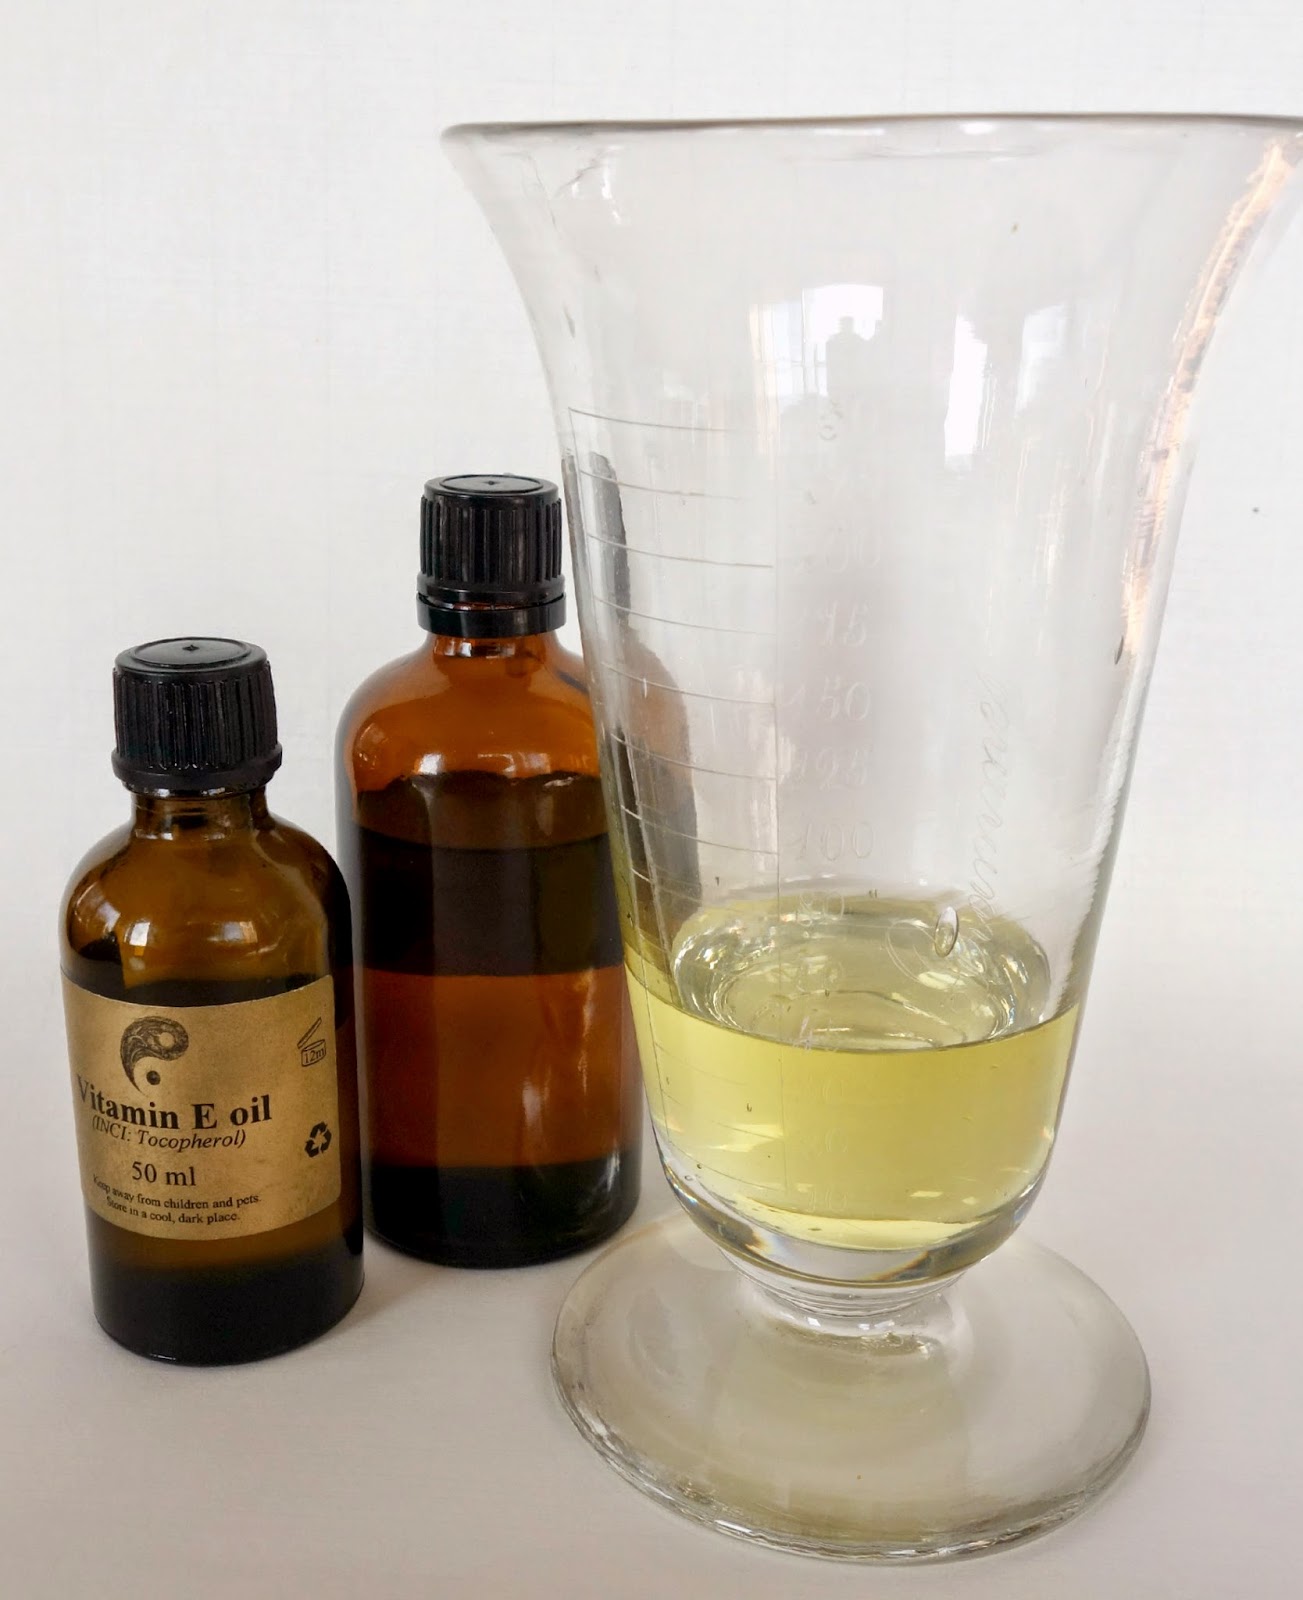 carrier oils, rose hip oil, vitamin e oil, essential oils, body care